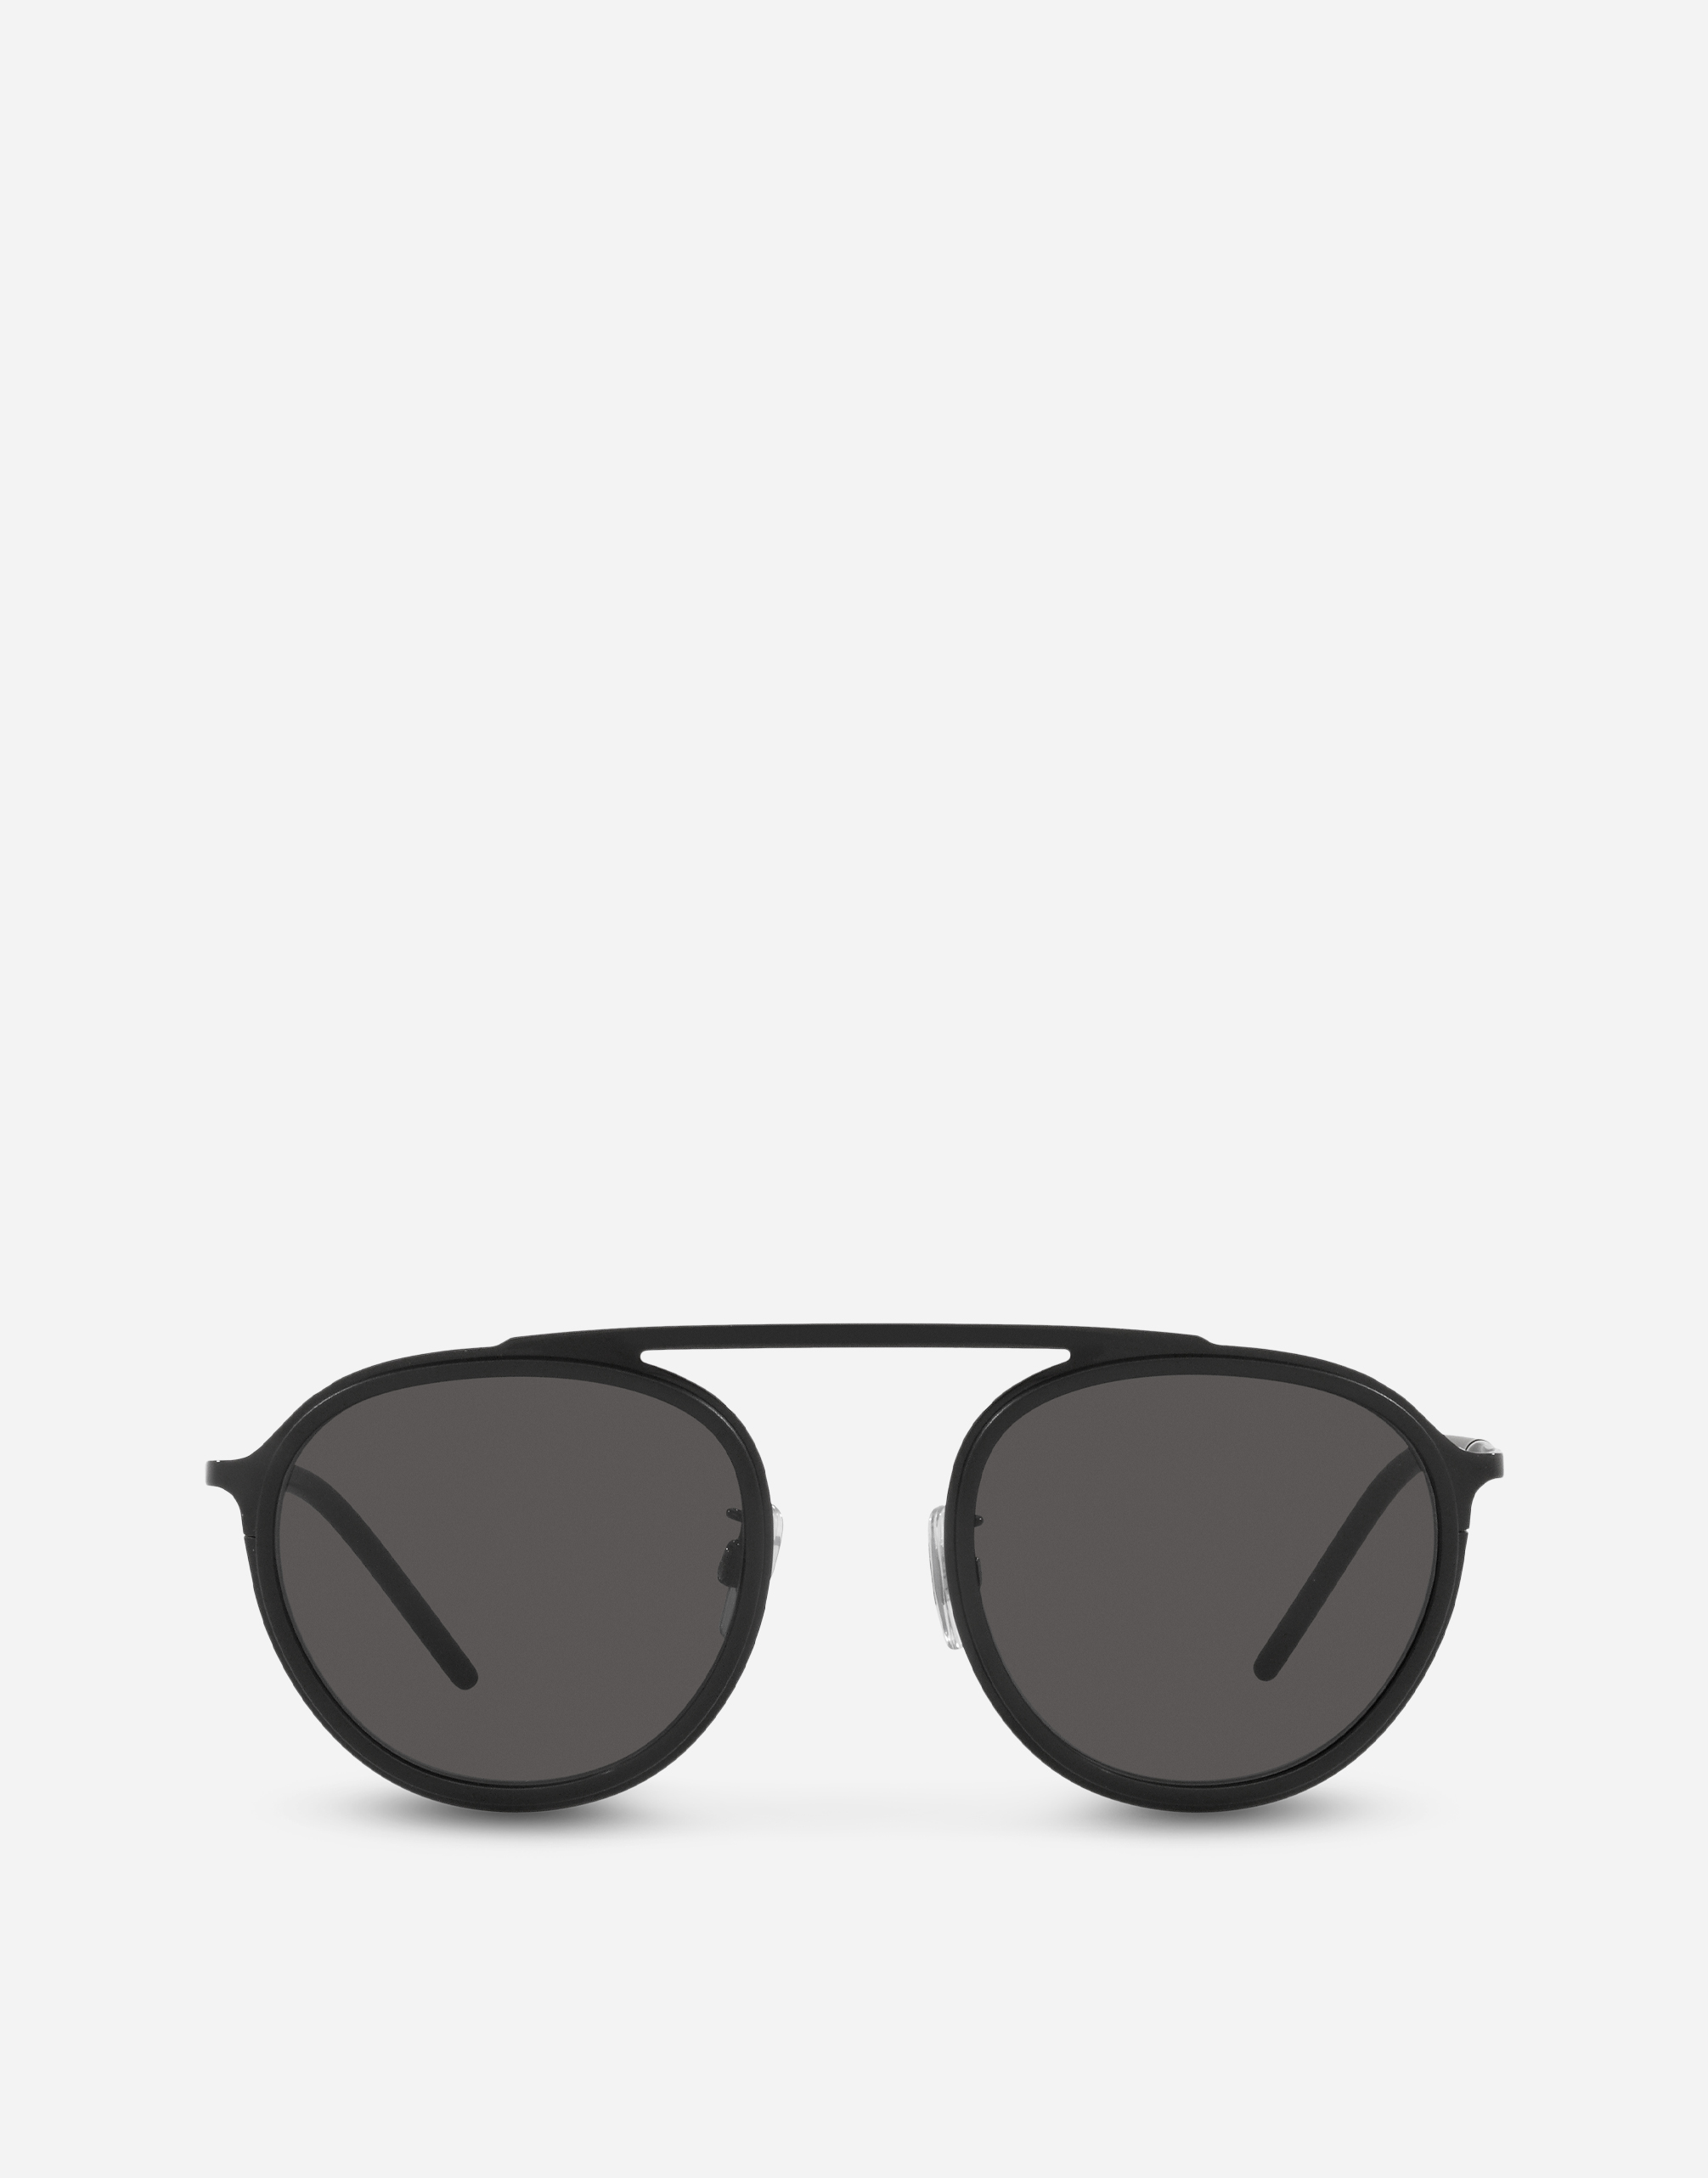 Madison sunglasses in Black